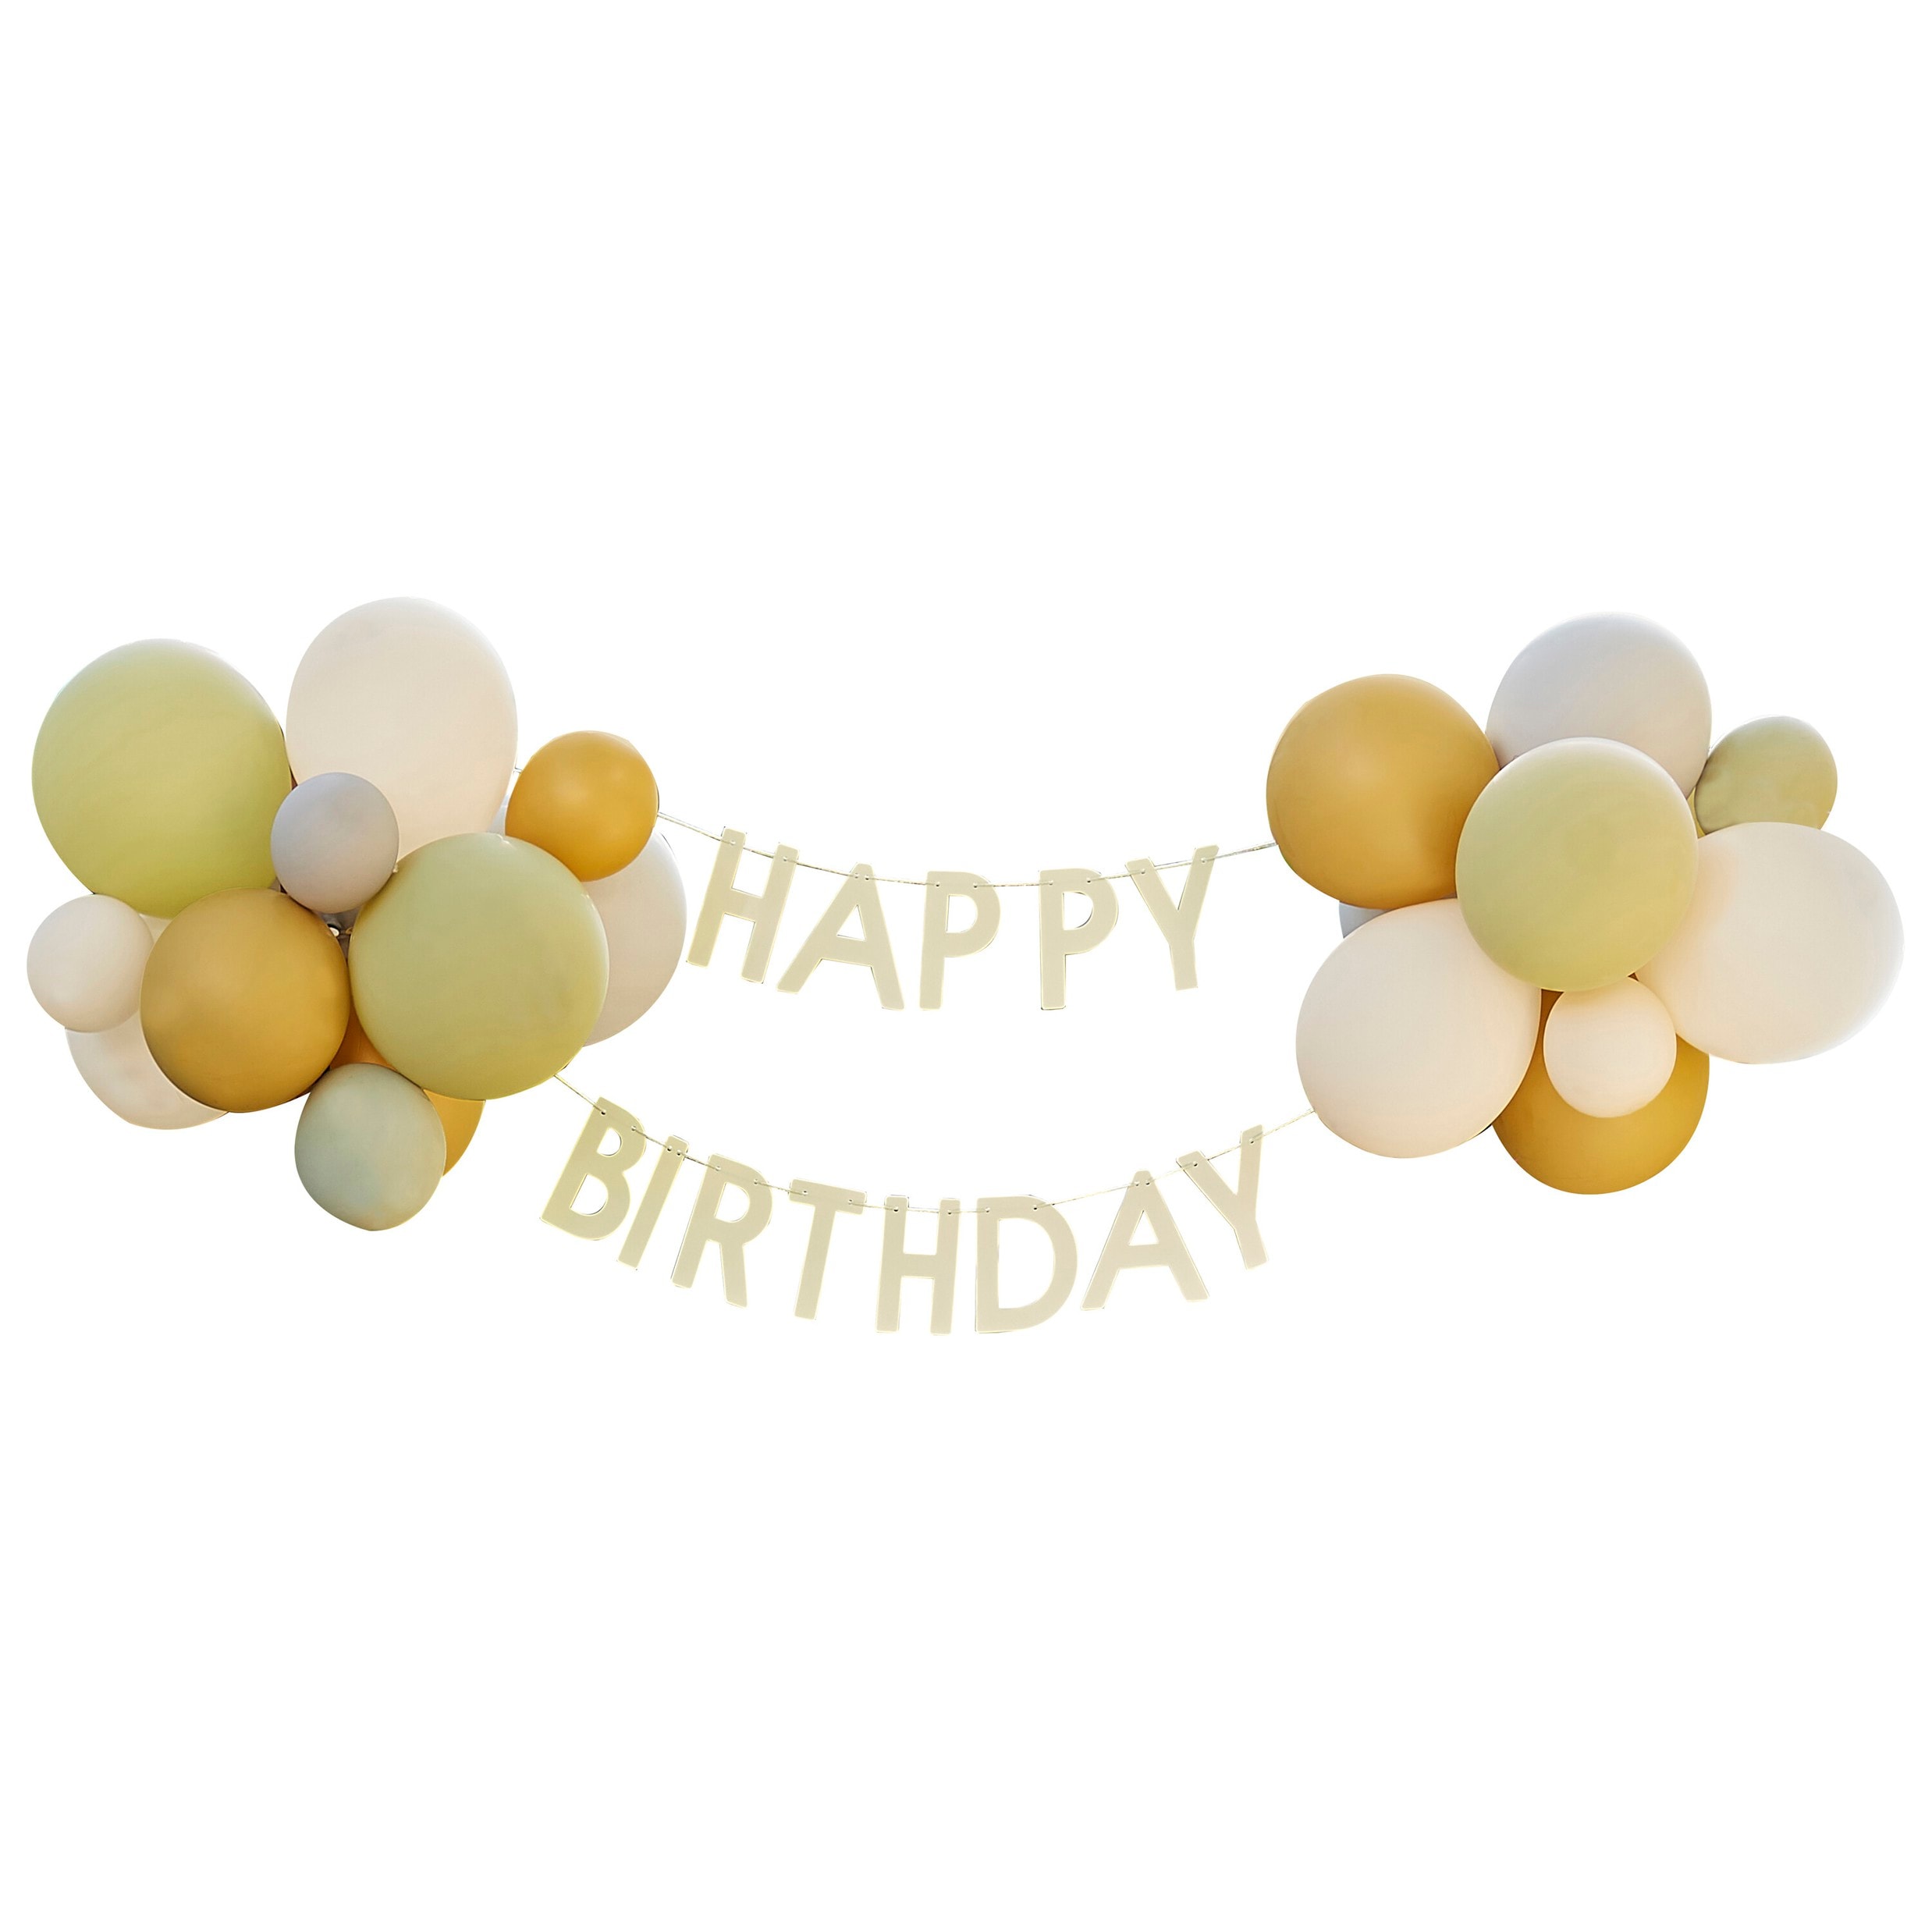 Let's Go Wild - Happy Birthday-Girlande mit Luftballons